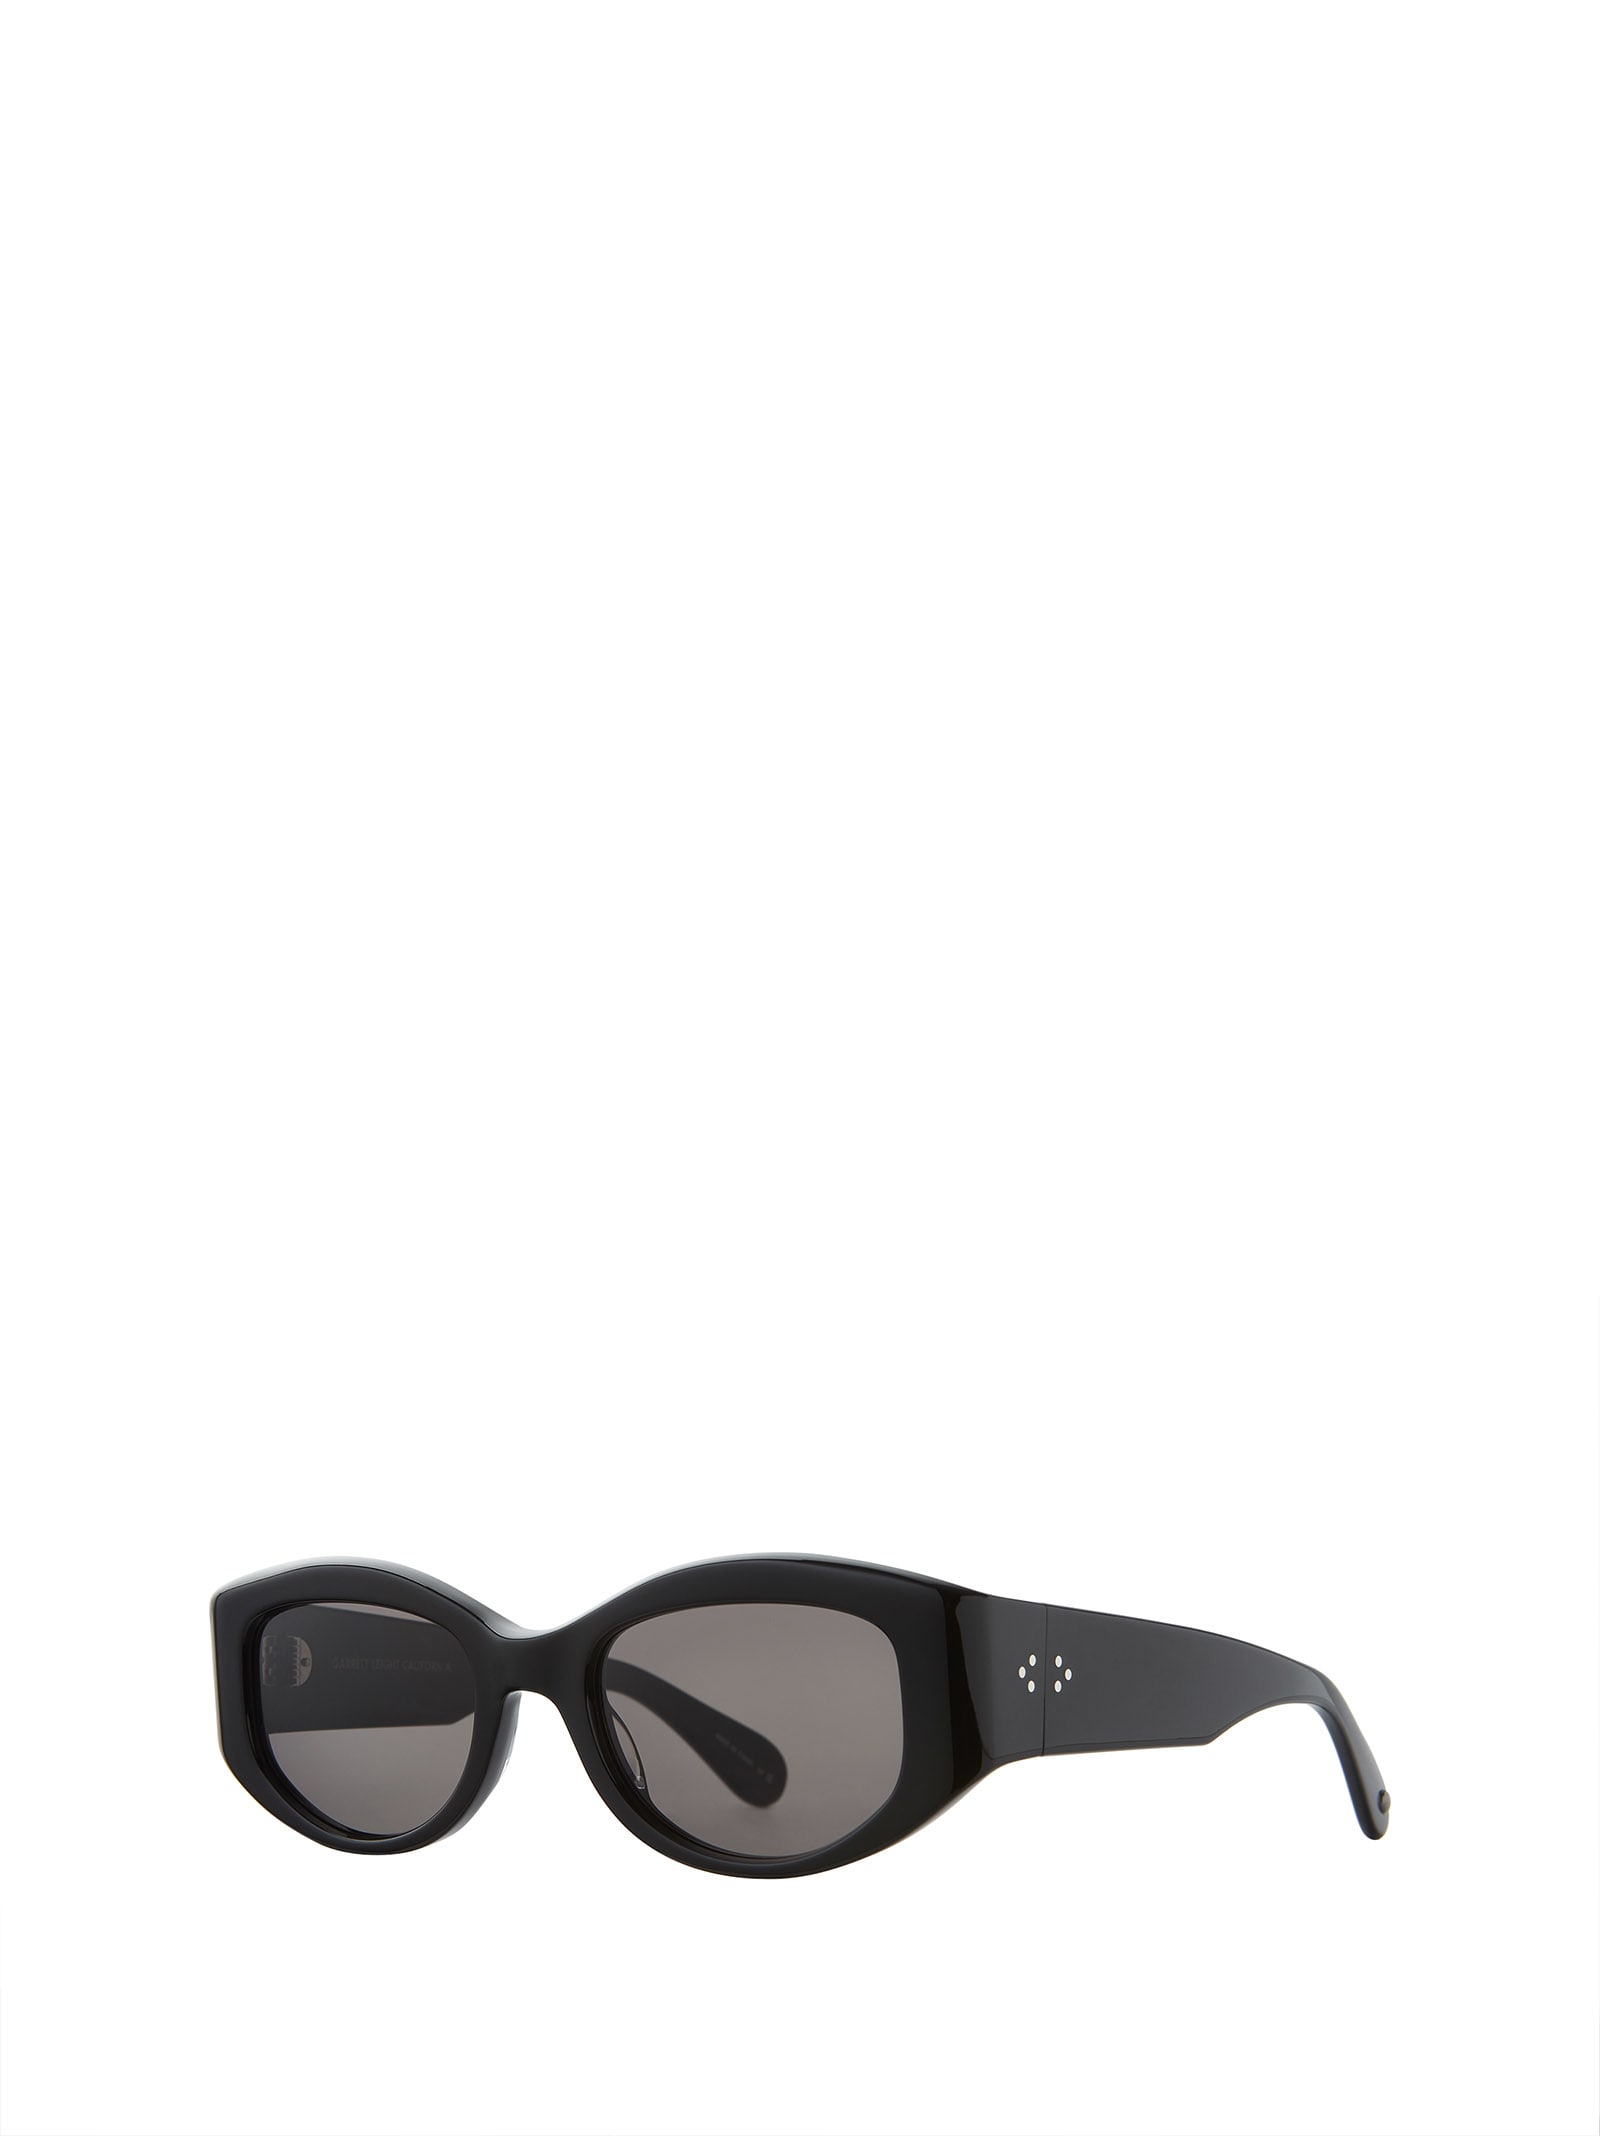 Garrett Leight Glco Round Sunglasses, 49mm In Black/gray Solid | ModeSens